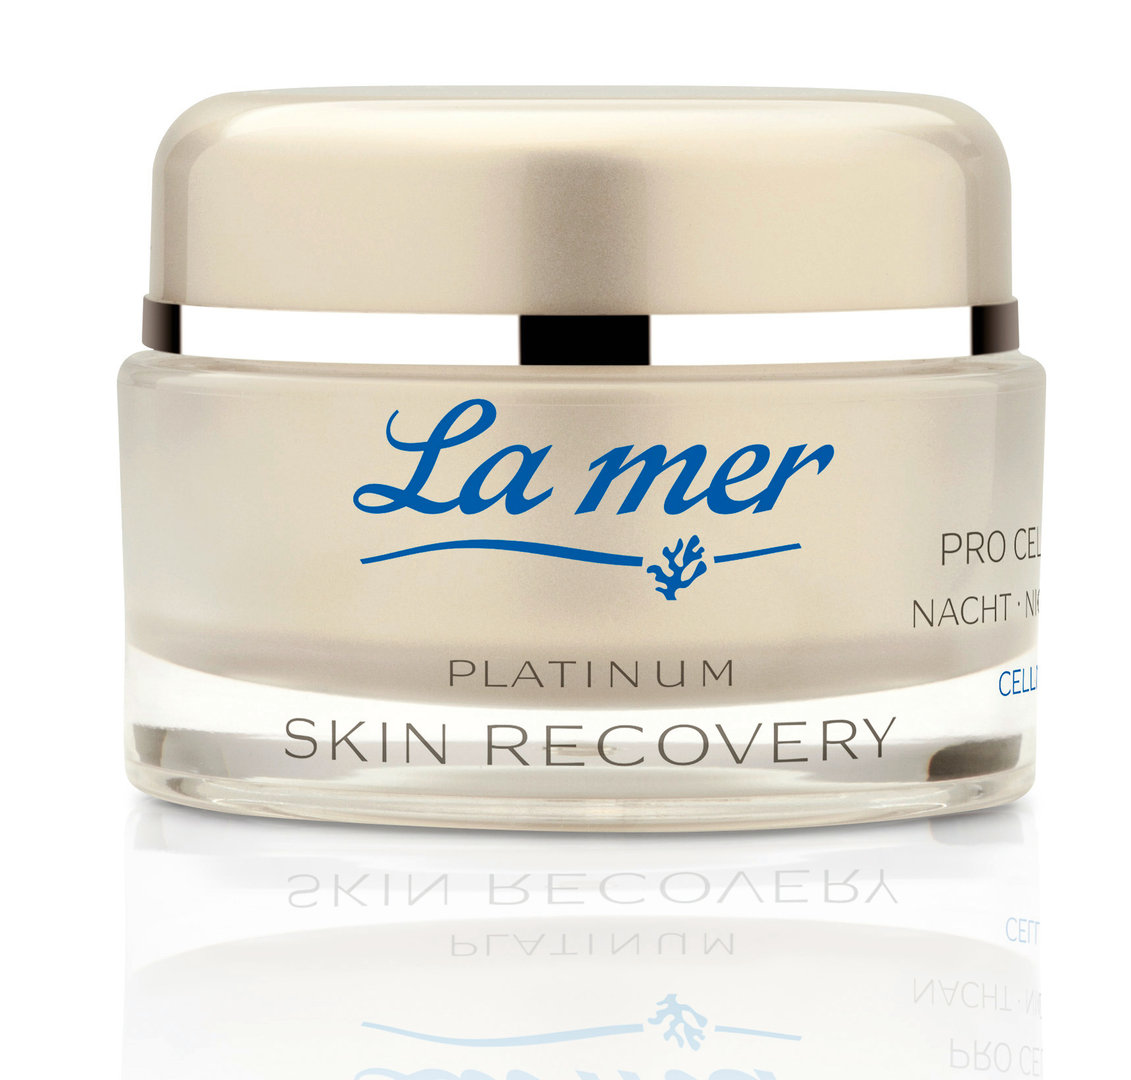 La mer Platinum Skin Recovery Pro Cell Cream Nacht 50 ml